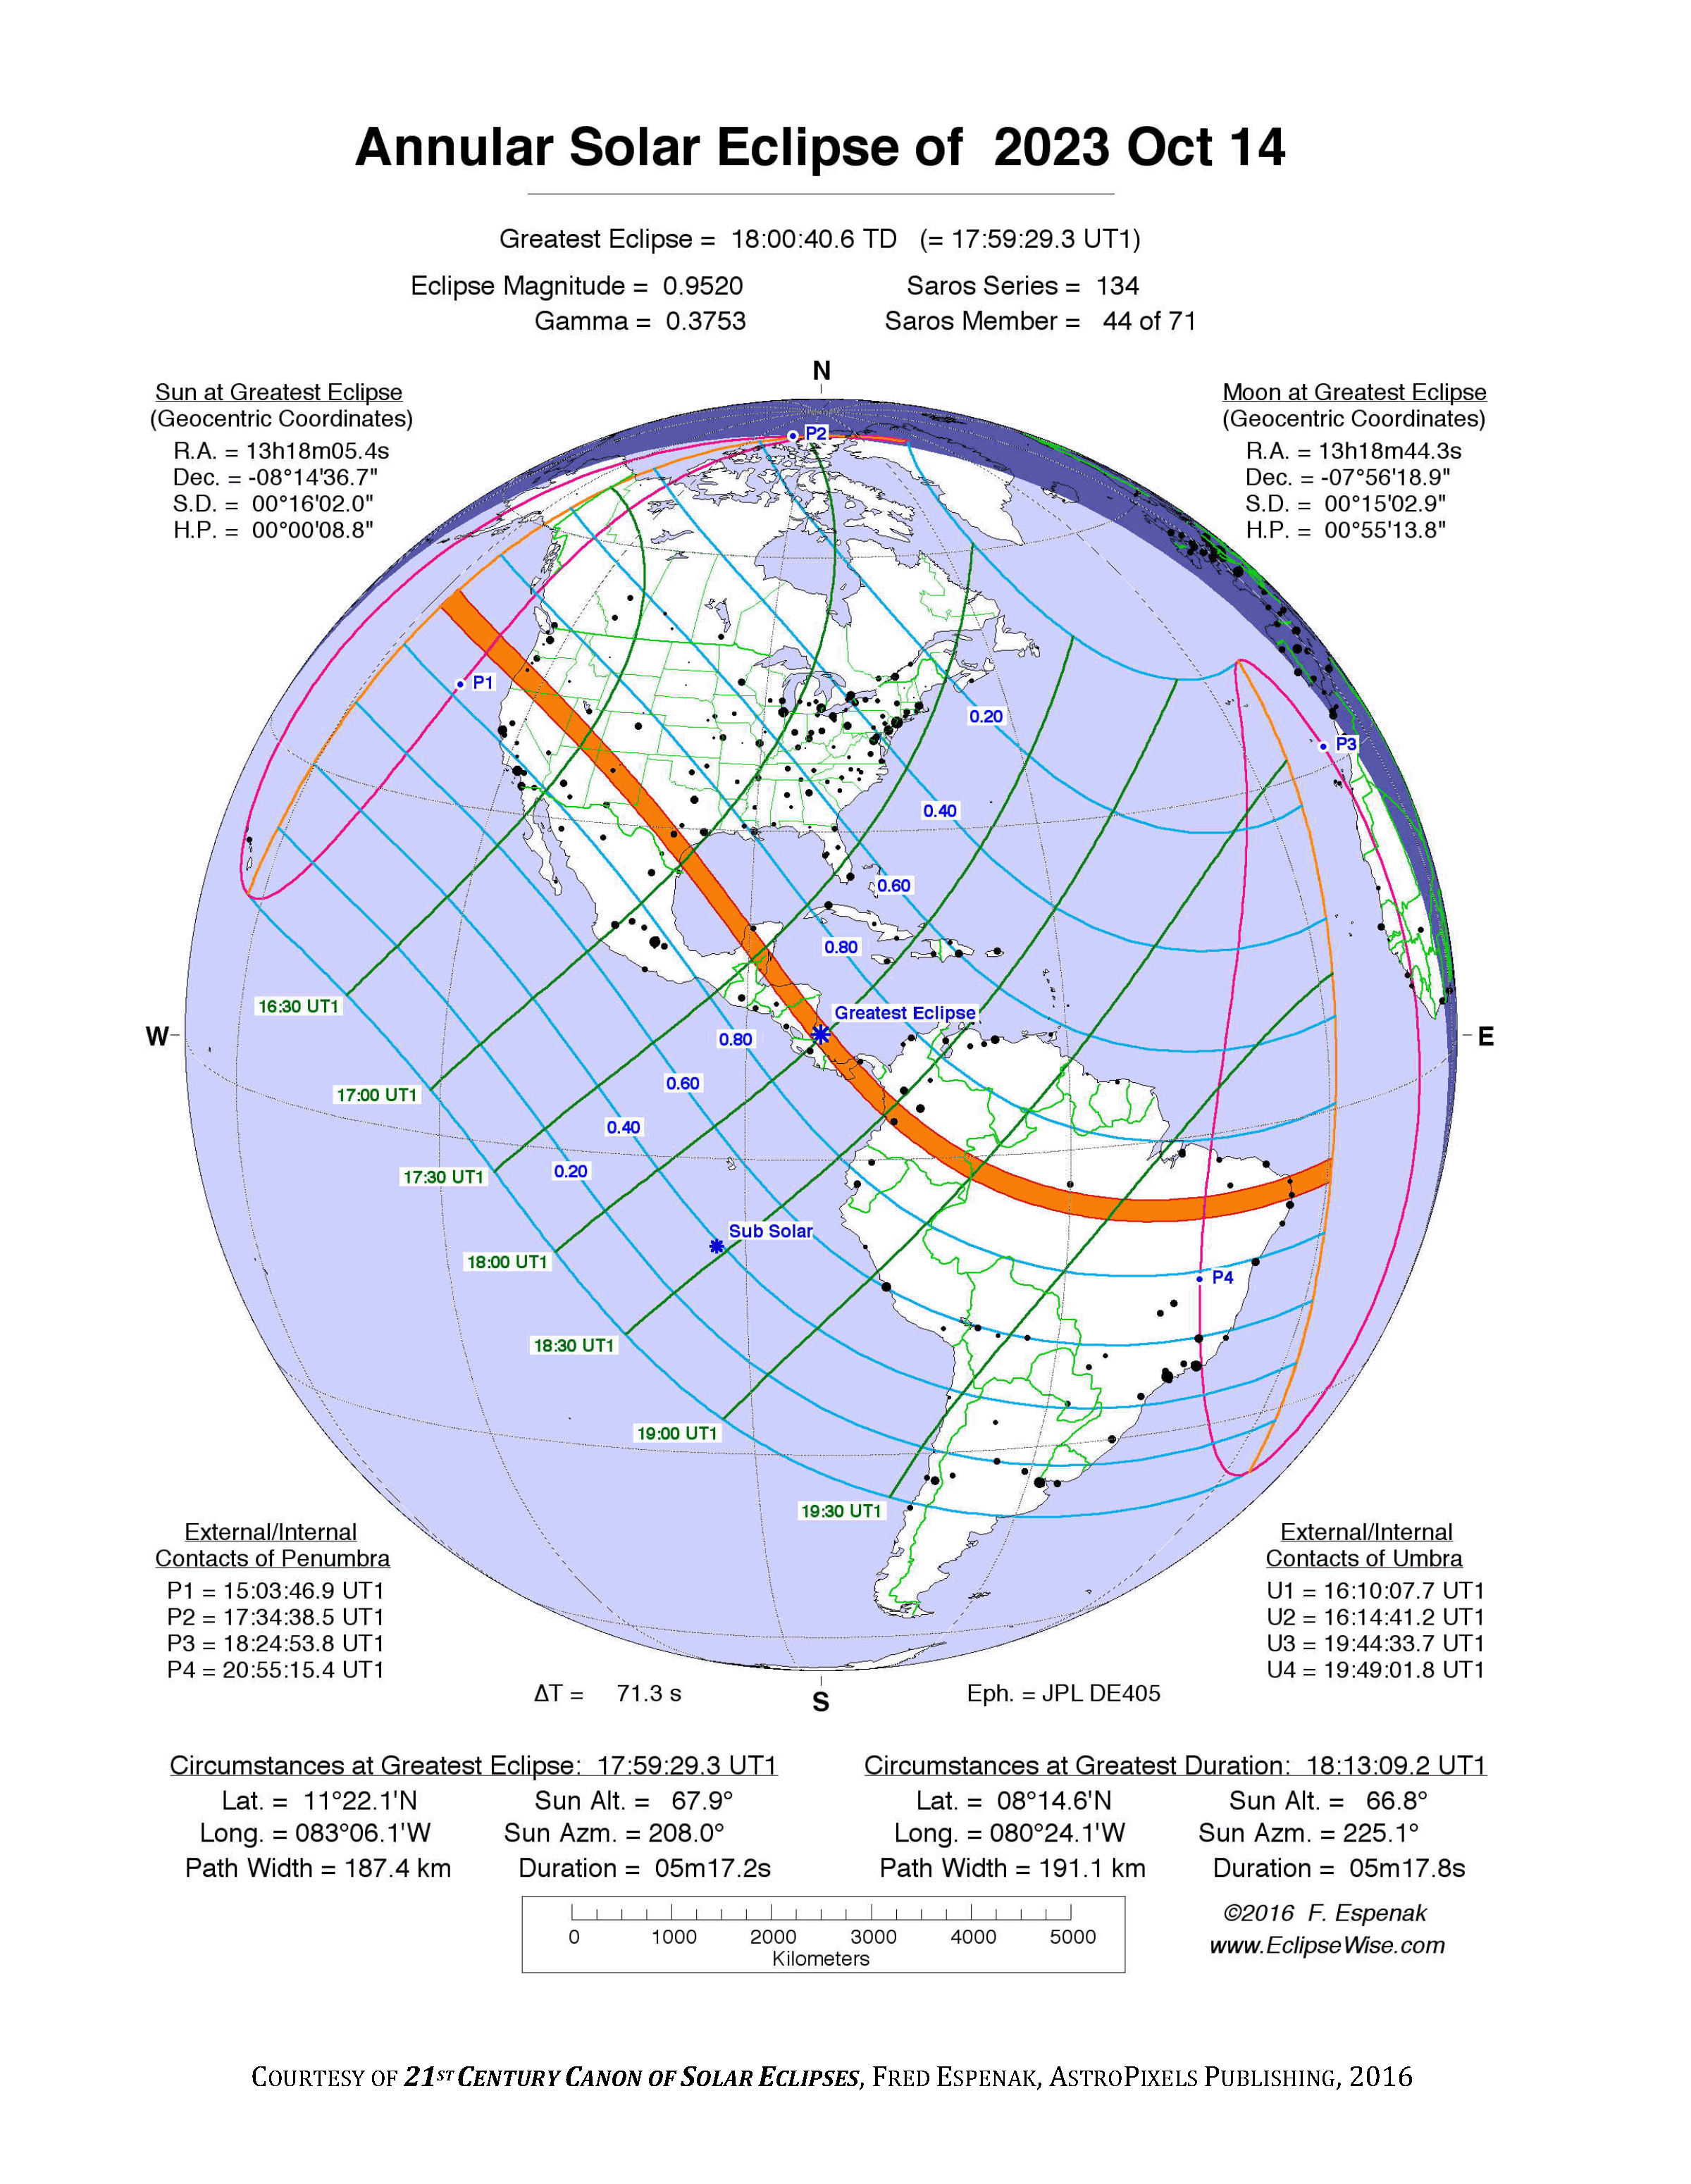 EclipseWise - Annular Solar Eclipse of 2023 Oct 14